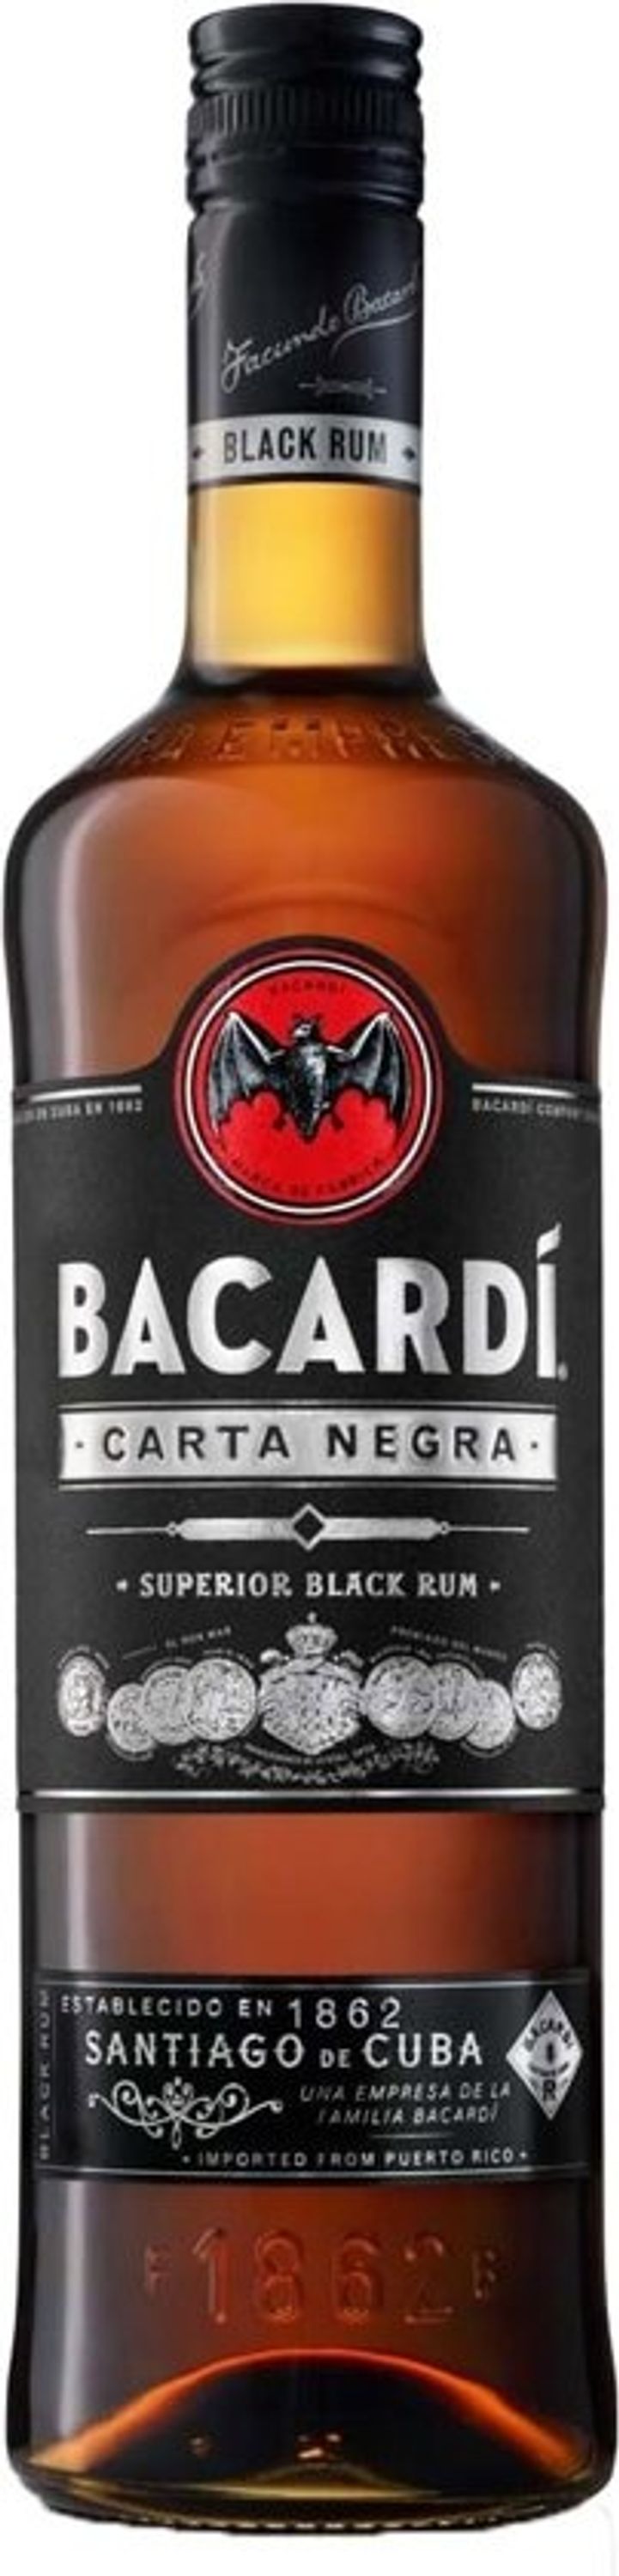 Bacardi Carta Negra Rum 0.7l, alc. 37.5% by volume